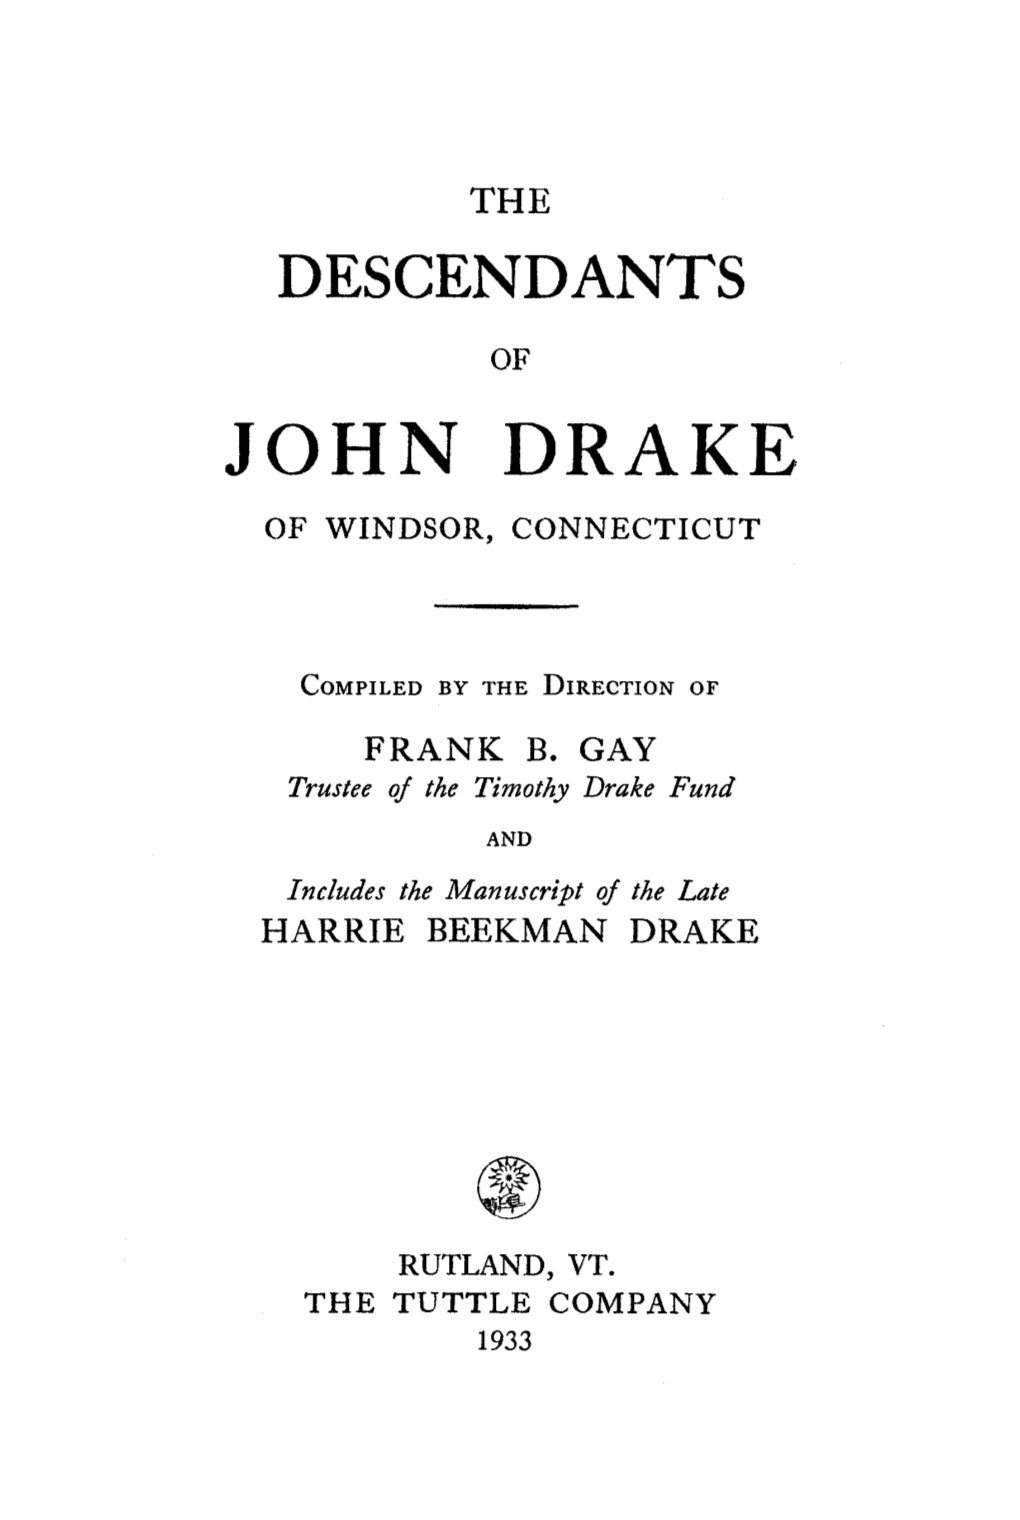 John Drake of Windsor, Connecticut